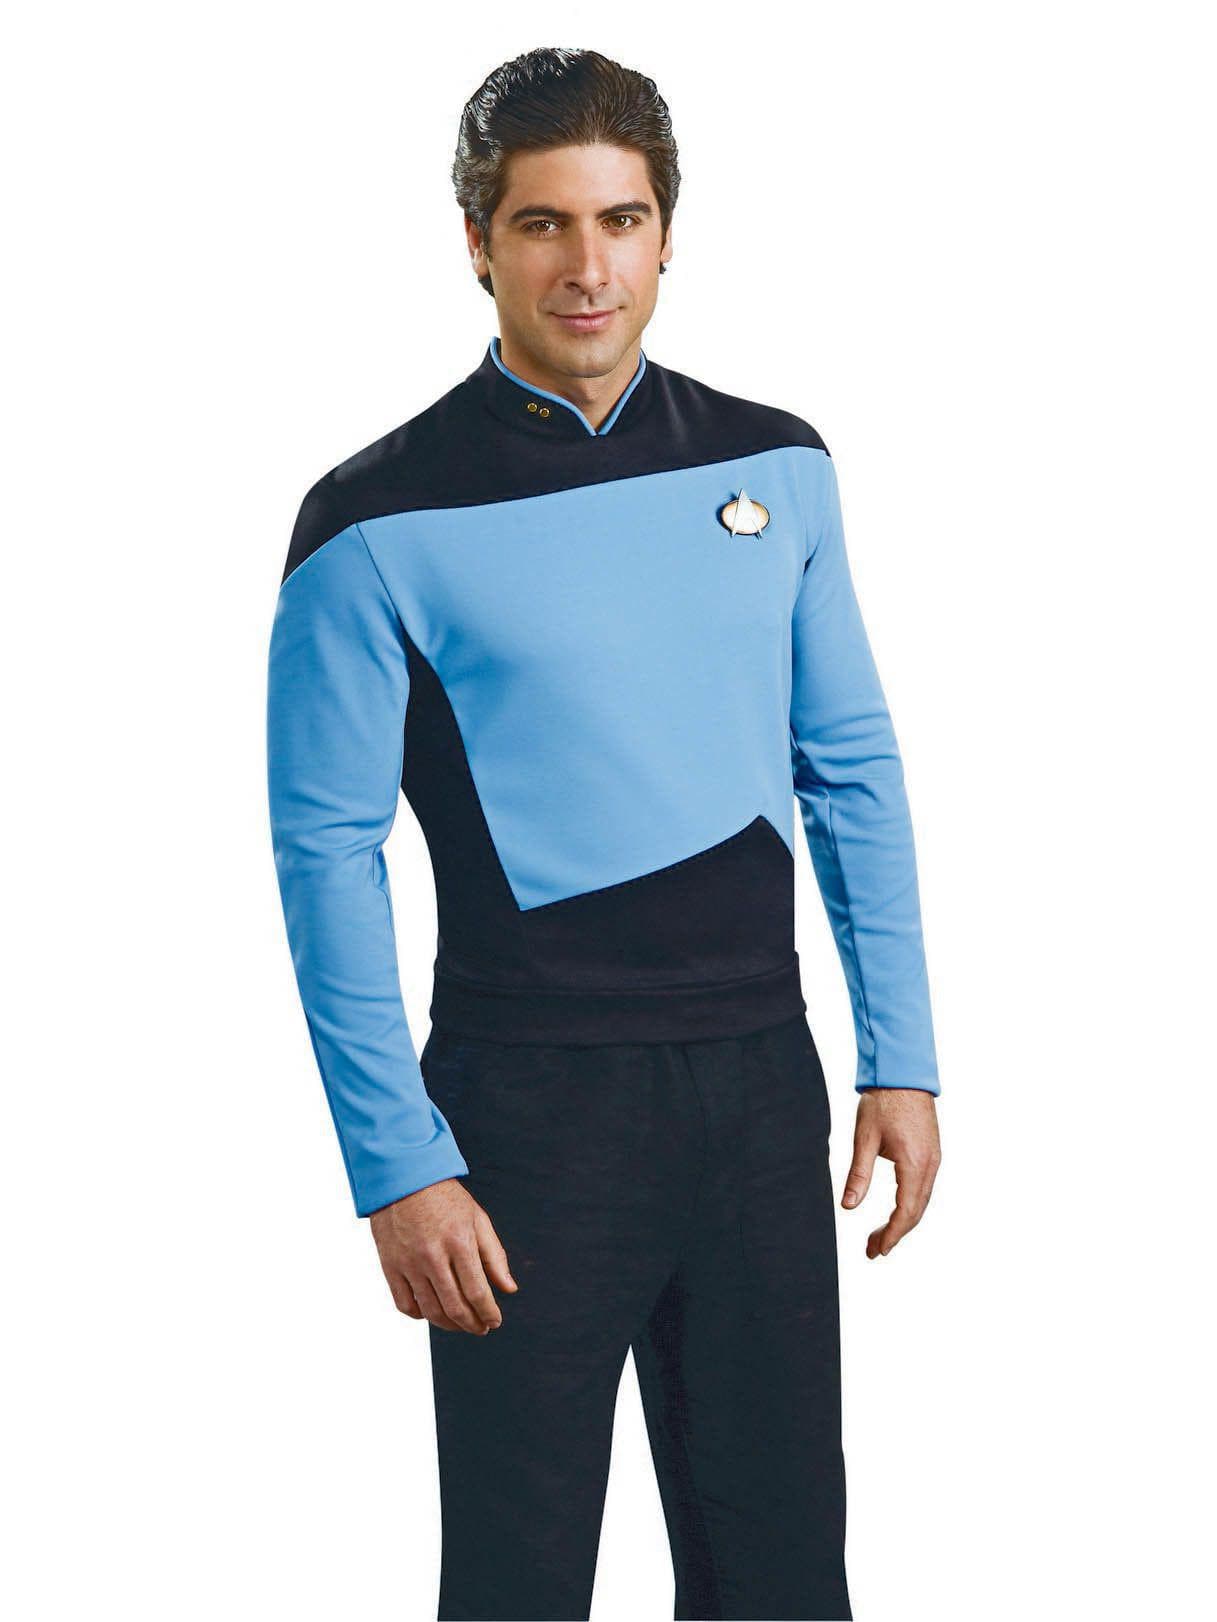 Men's Star Trek: The Next Generation Science Uniform - Deluxe - costumes.com